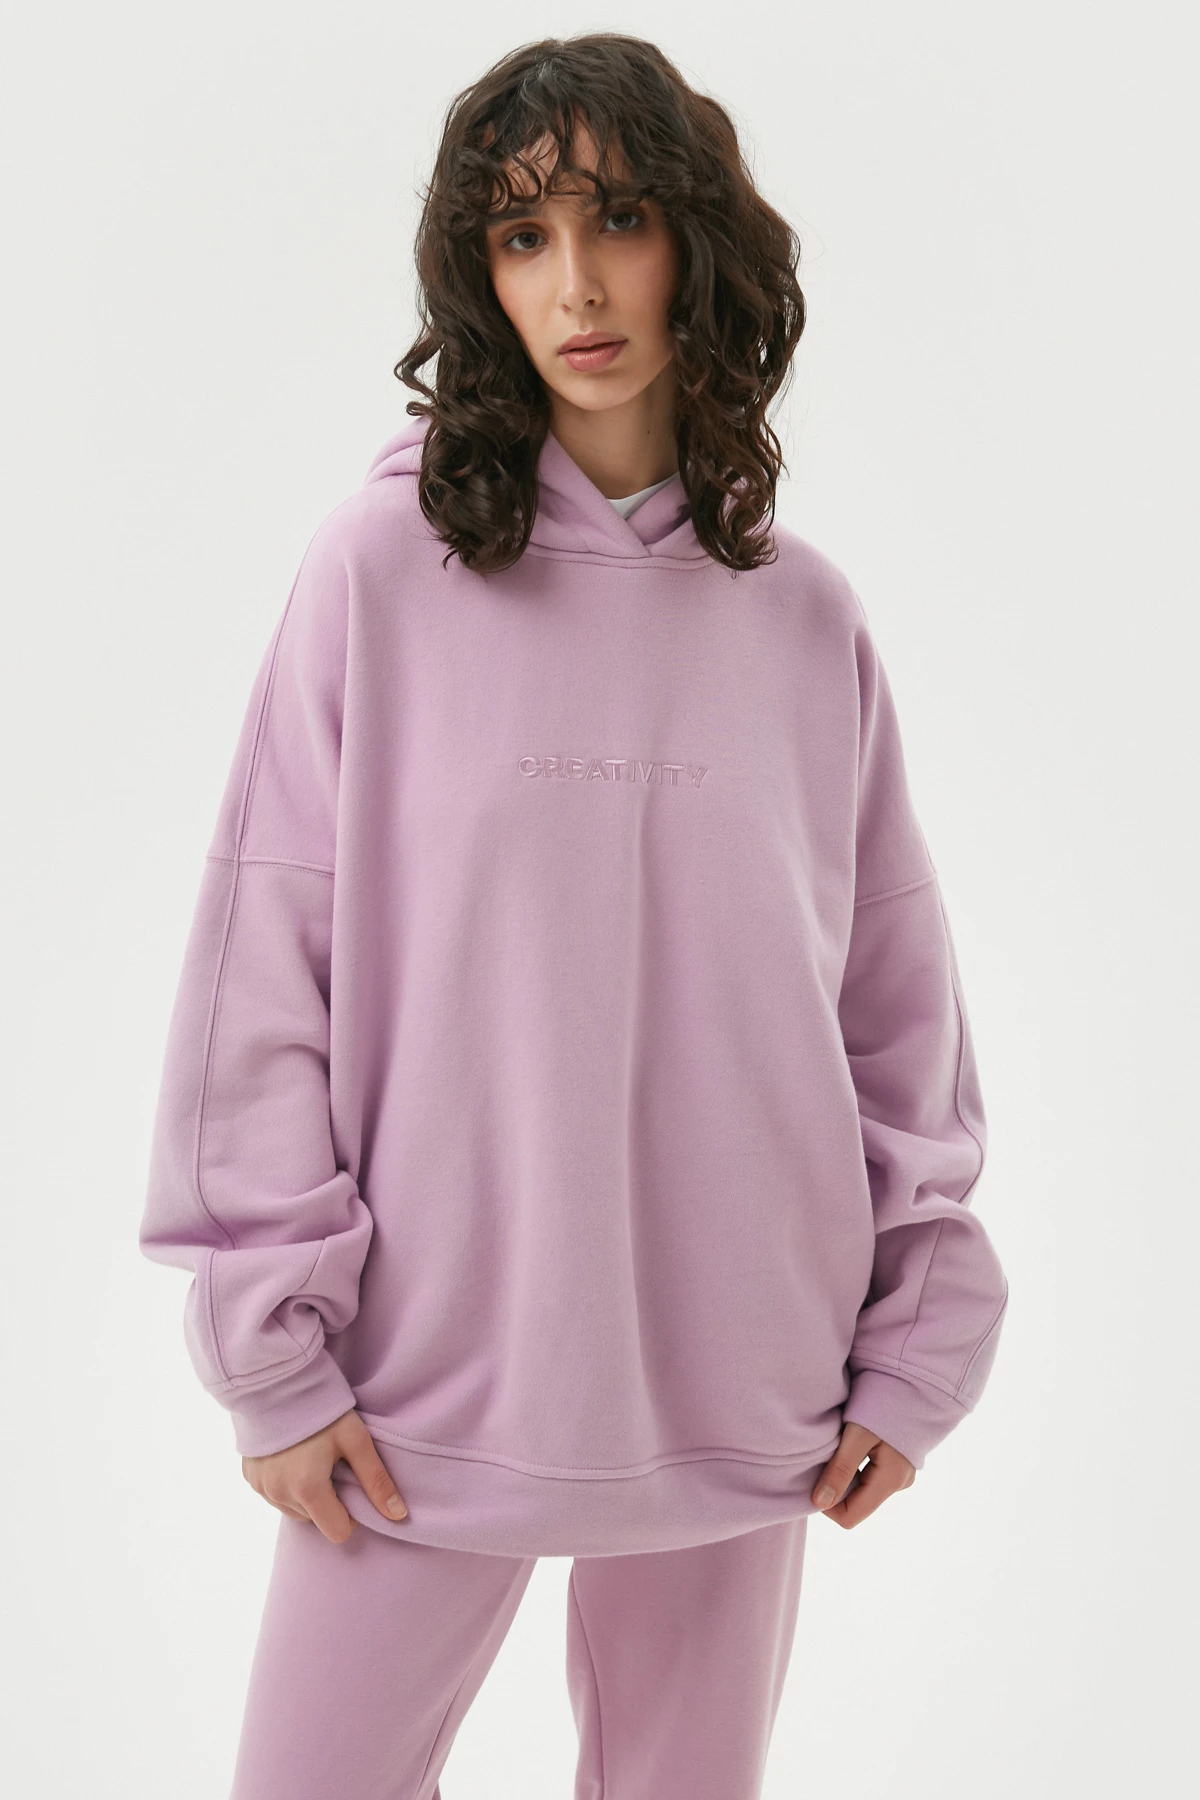 Lilac oversize jersey hoodie "Creativity", photo 1